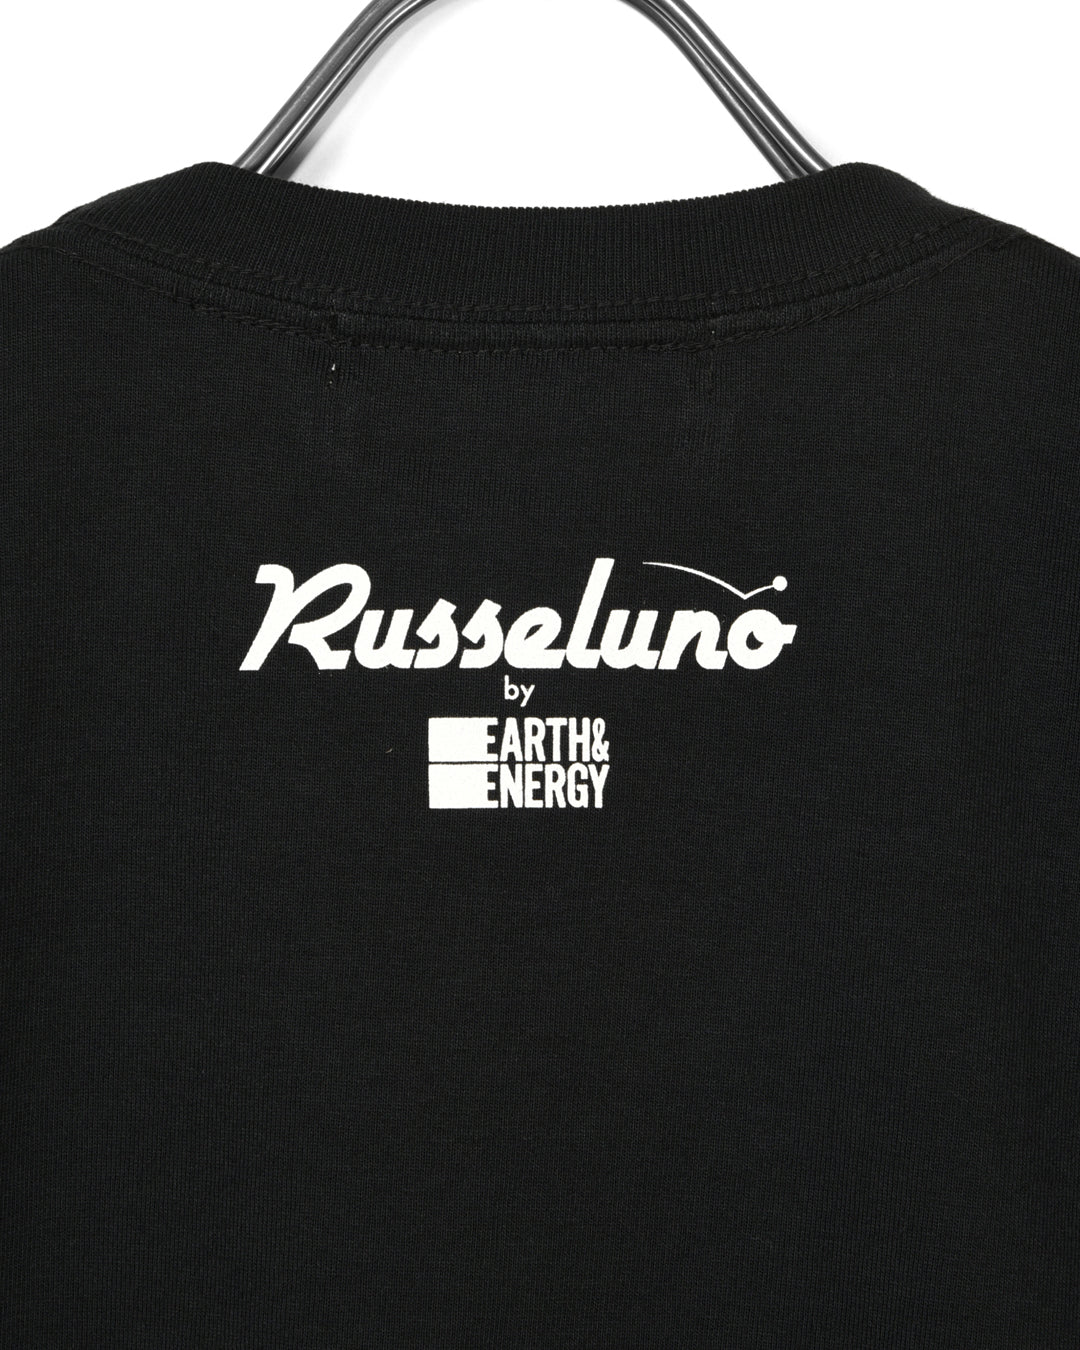 Russeluno de E&E Yengiworks camisetas